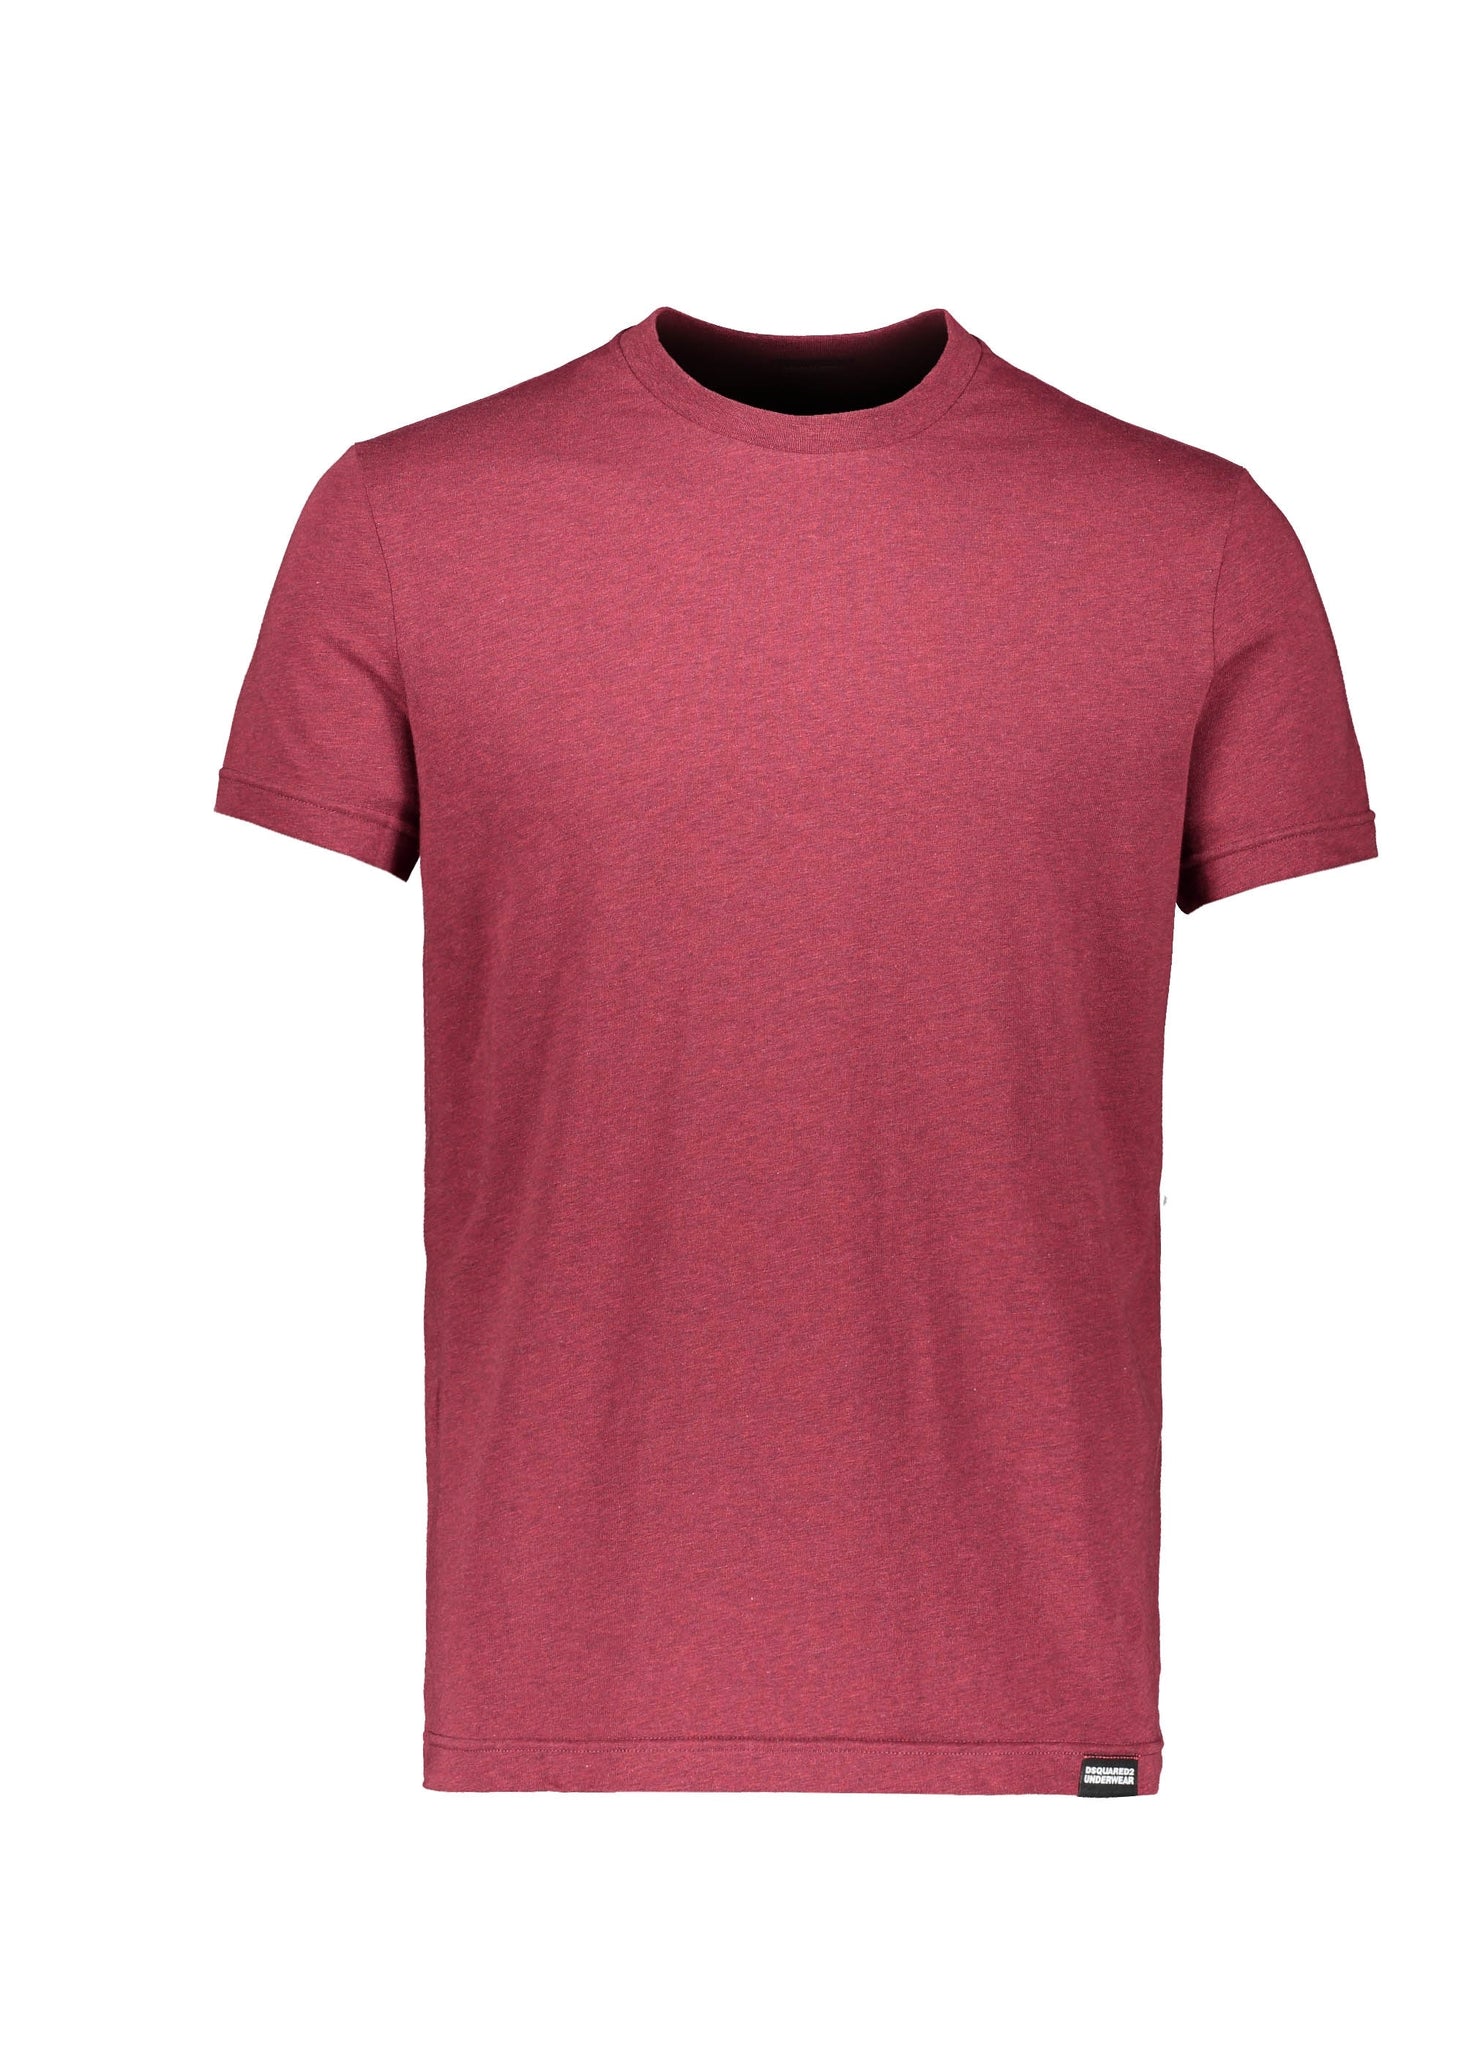 DSquared2 Round Neck T-Shirt- Burgundy